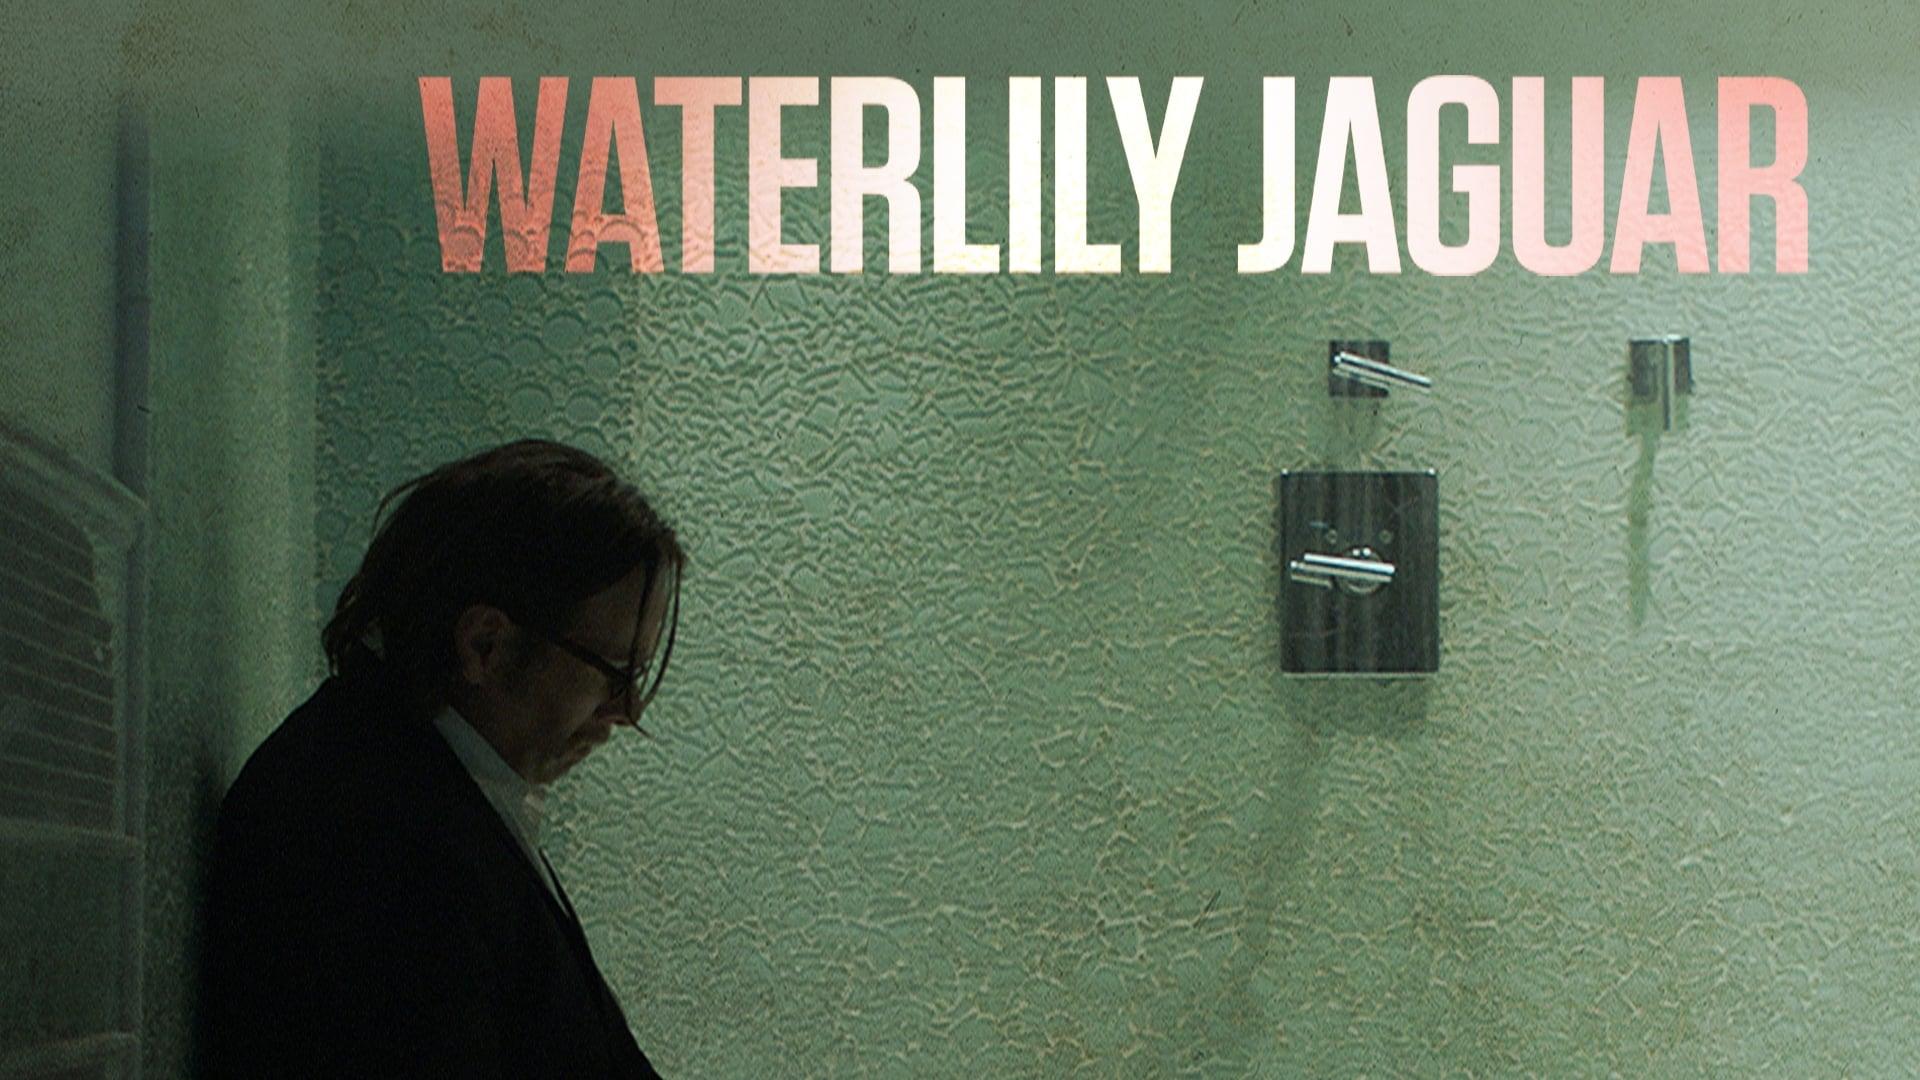 Waterlily Jaguar backdrop